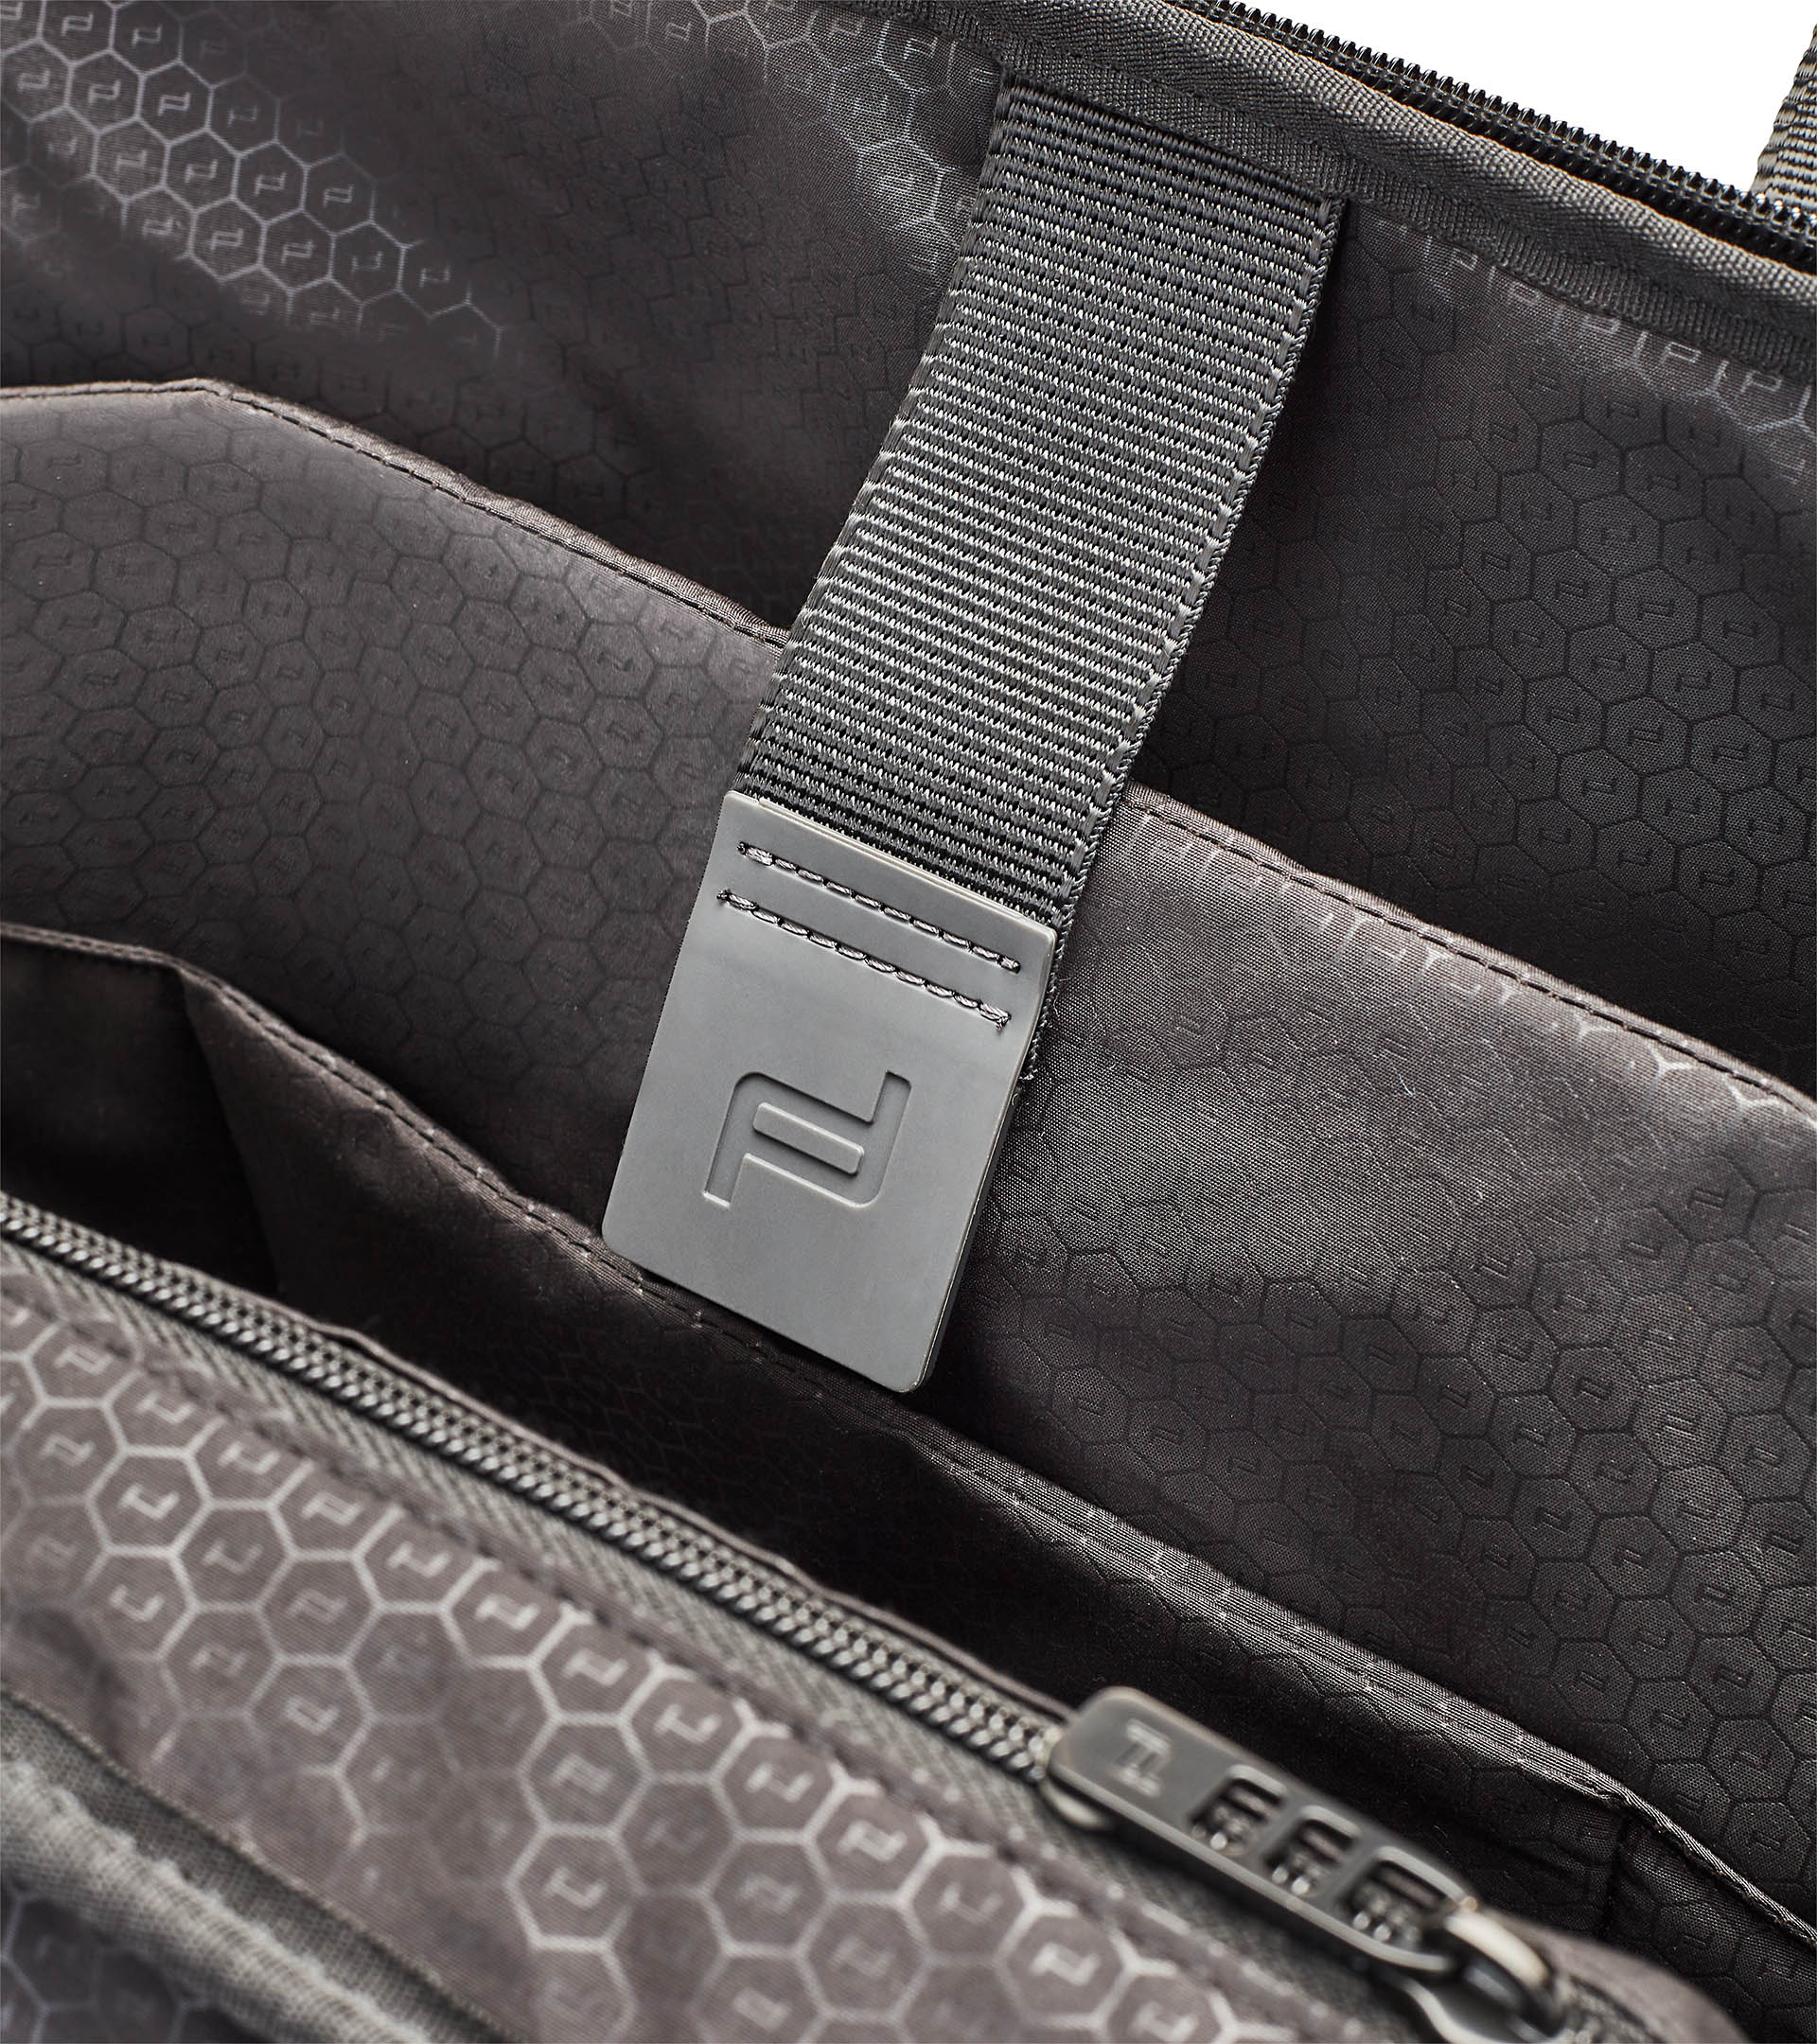 Urban Eco Briefcase M - Luxury Business Bags for Men | Porsche Design ...